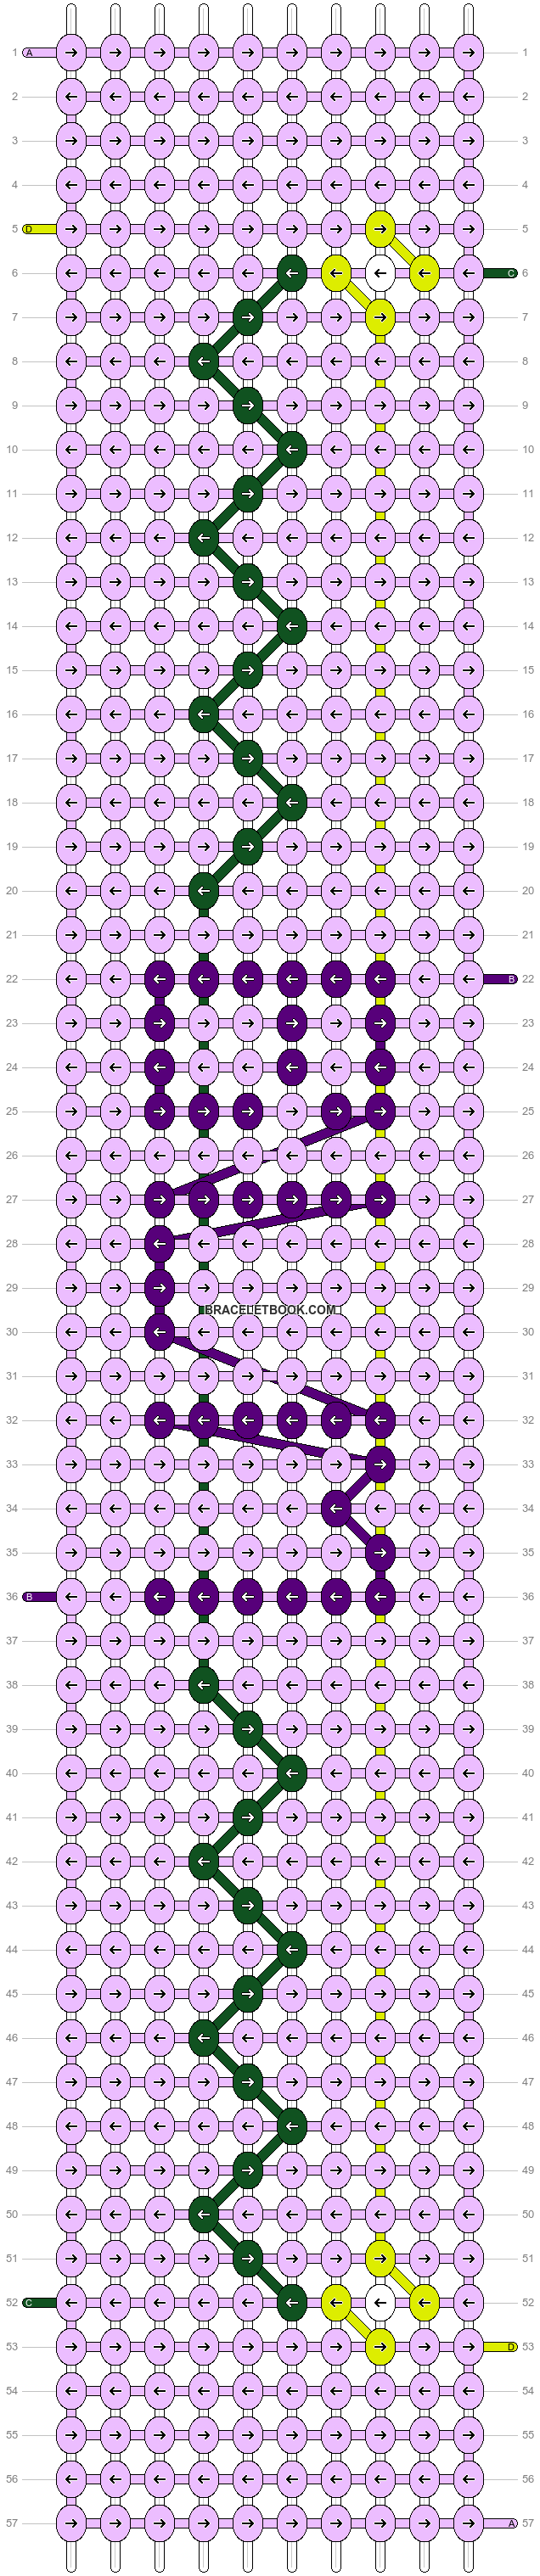 Alpha pattern #39228 pattern